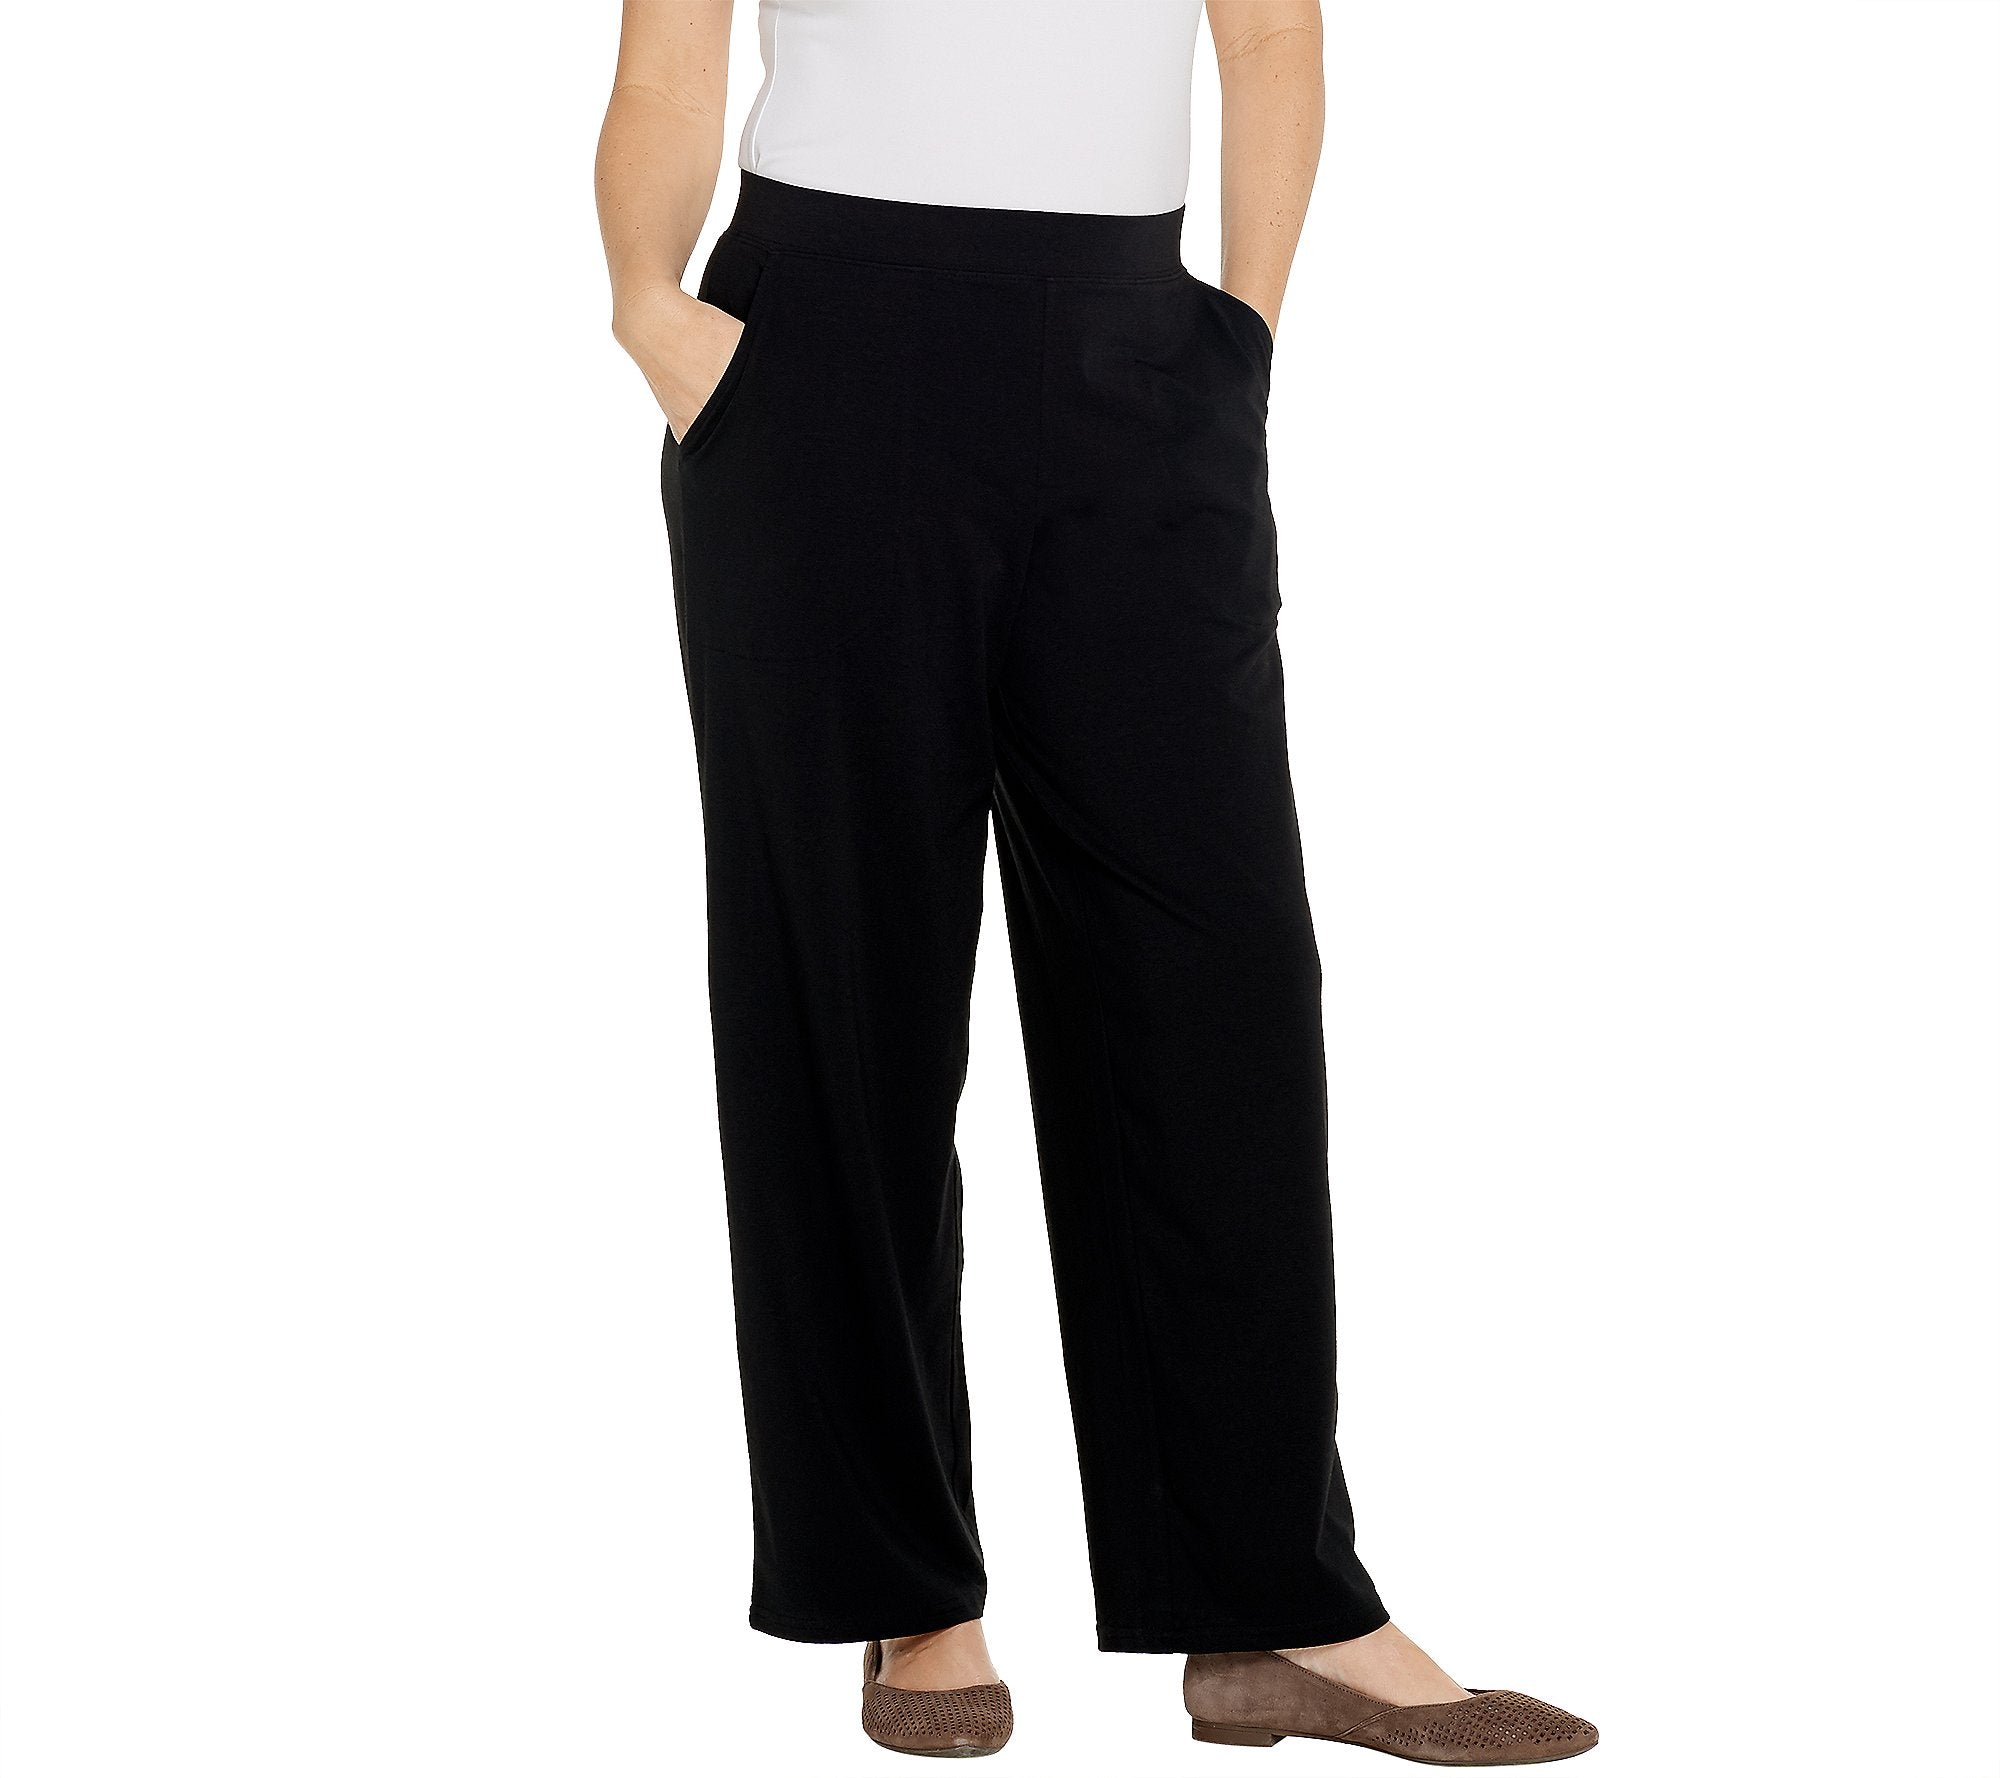 Denim & Co. Women's Beach Petite Pull-On Wide Leg Knit Pants